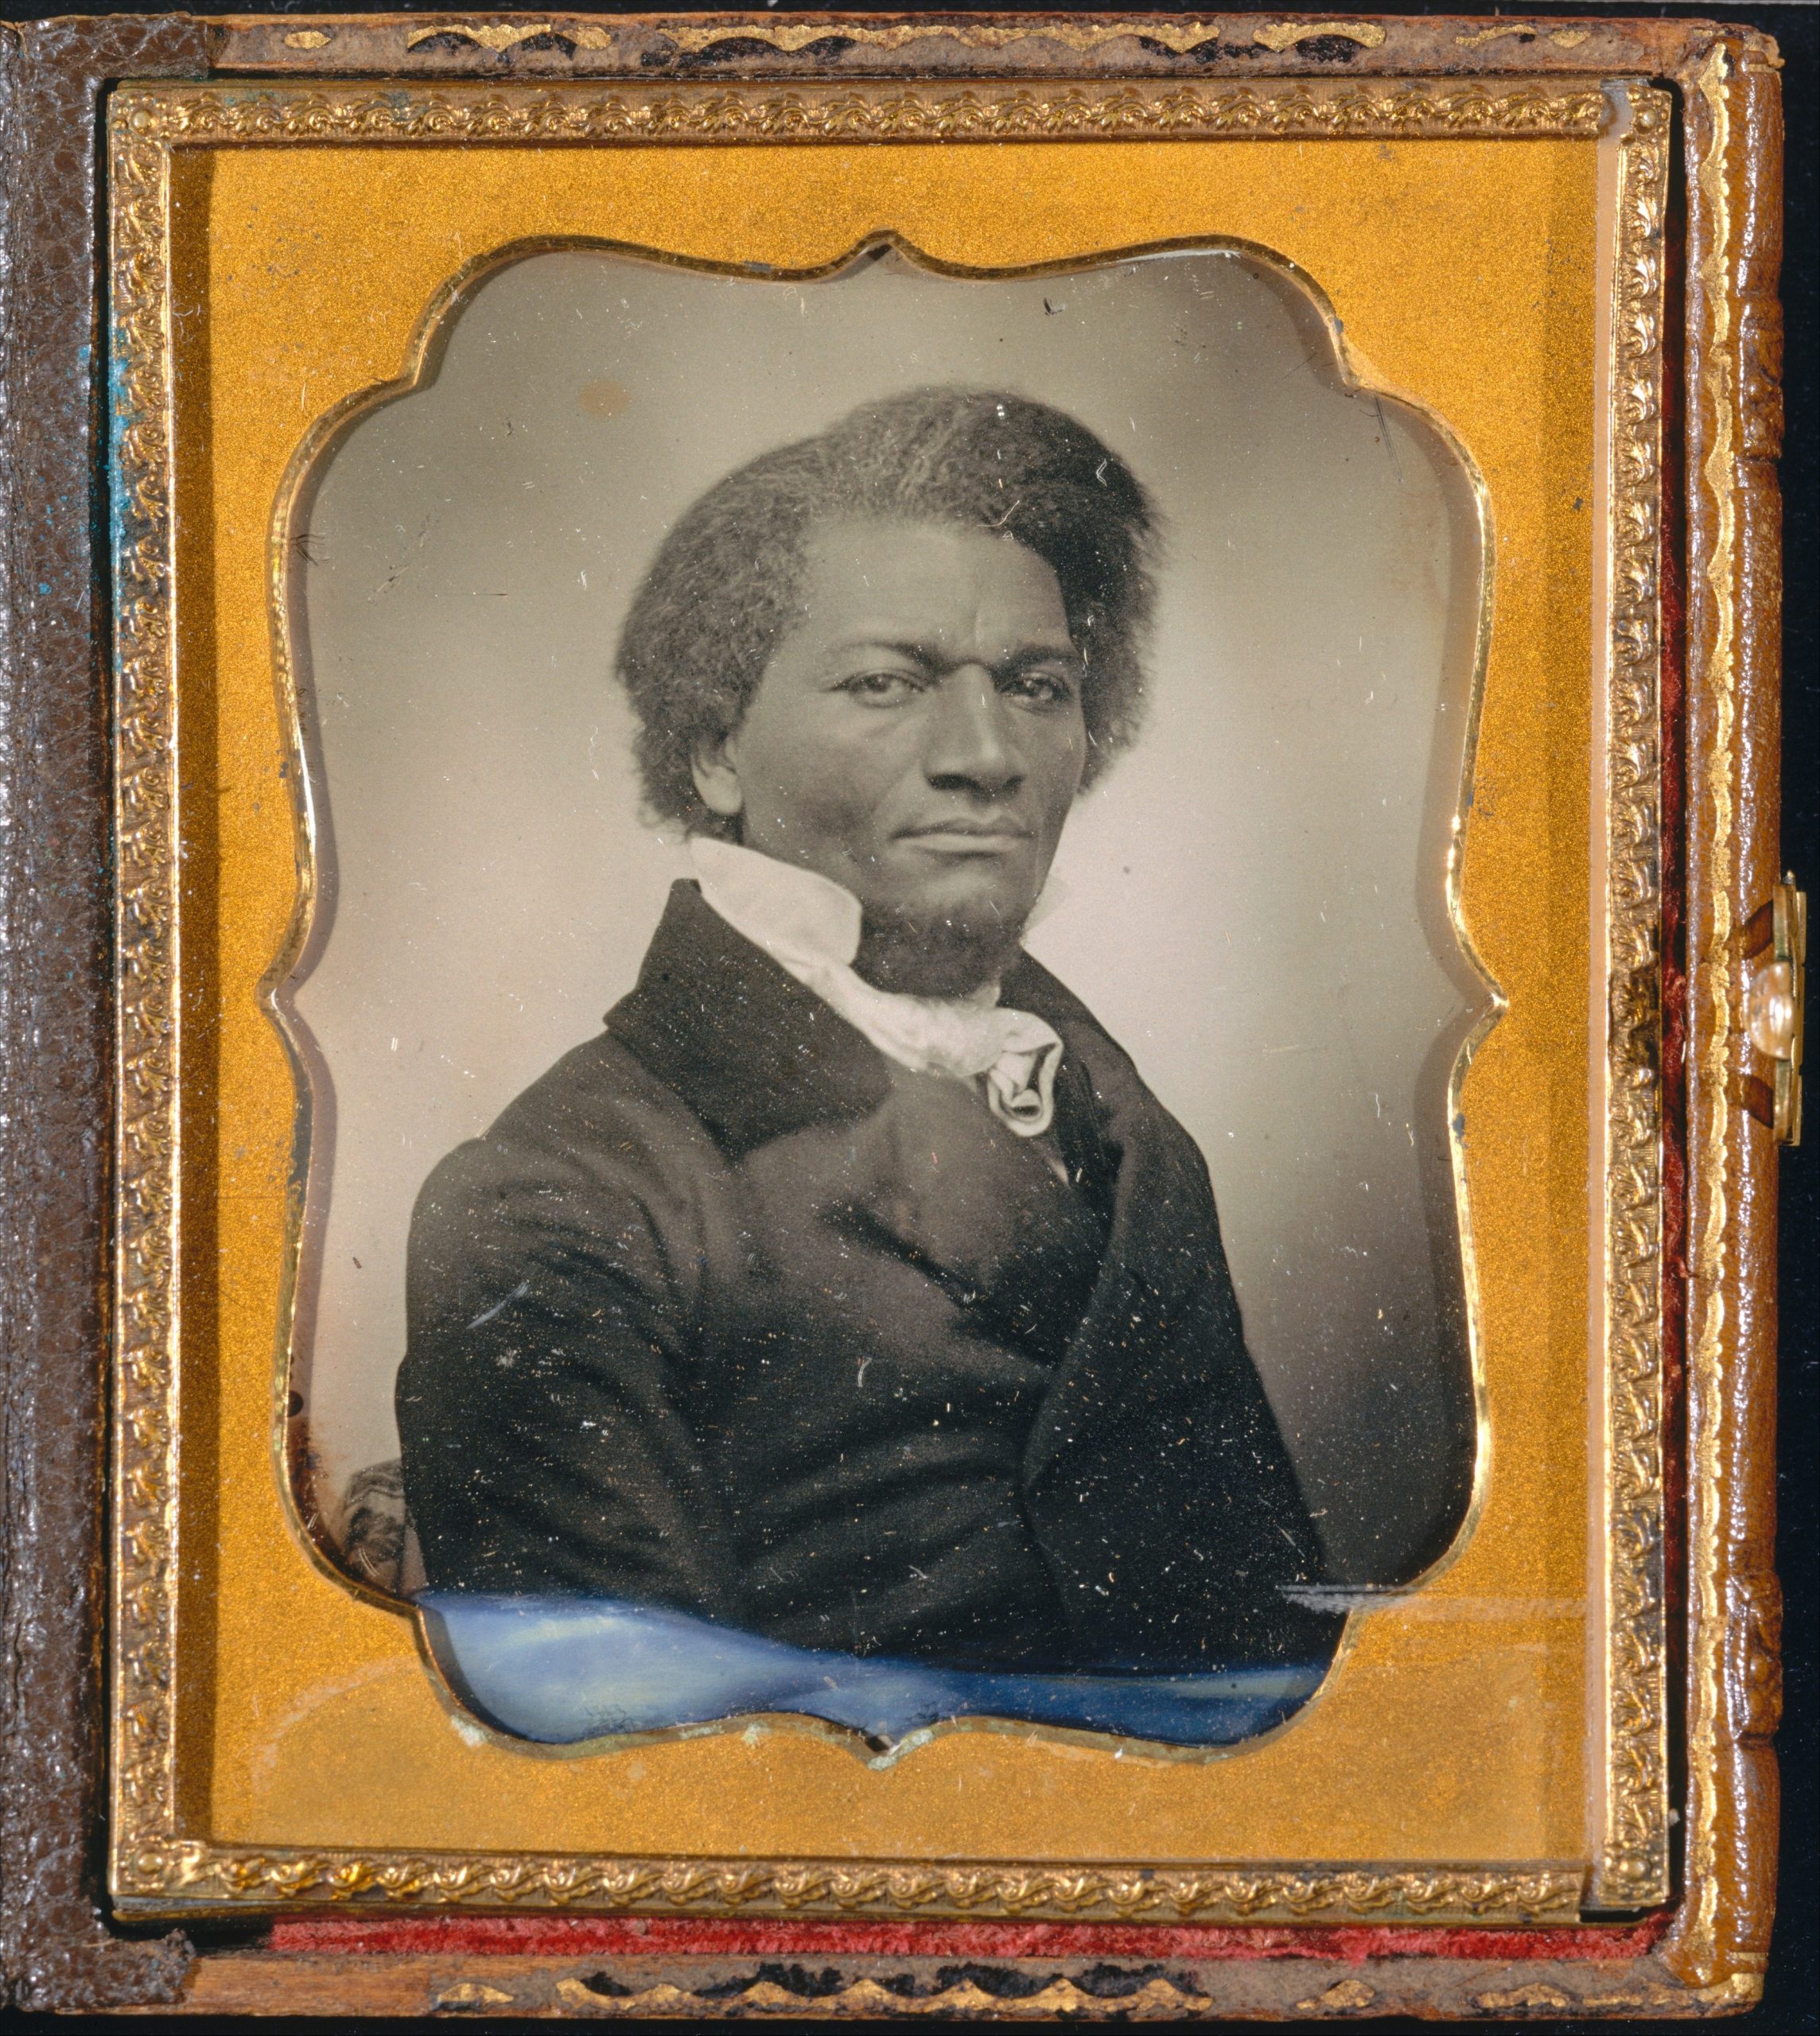 A framed photograph of a portrait of a man.